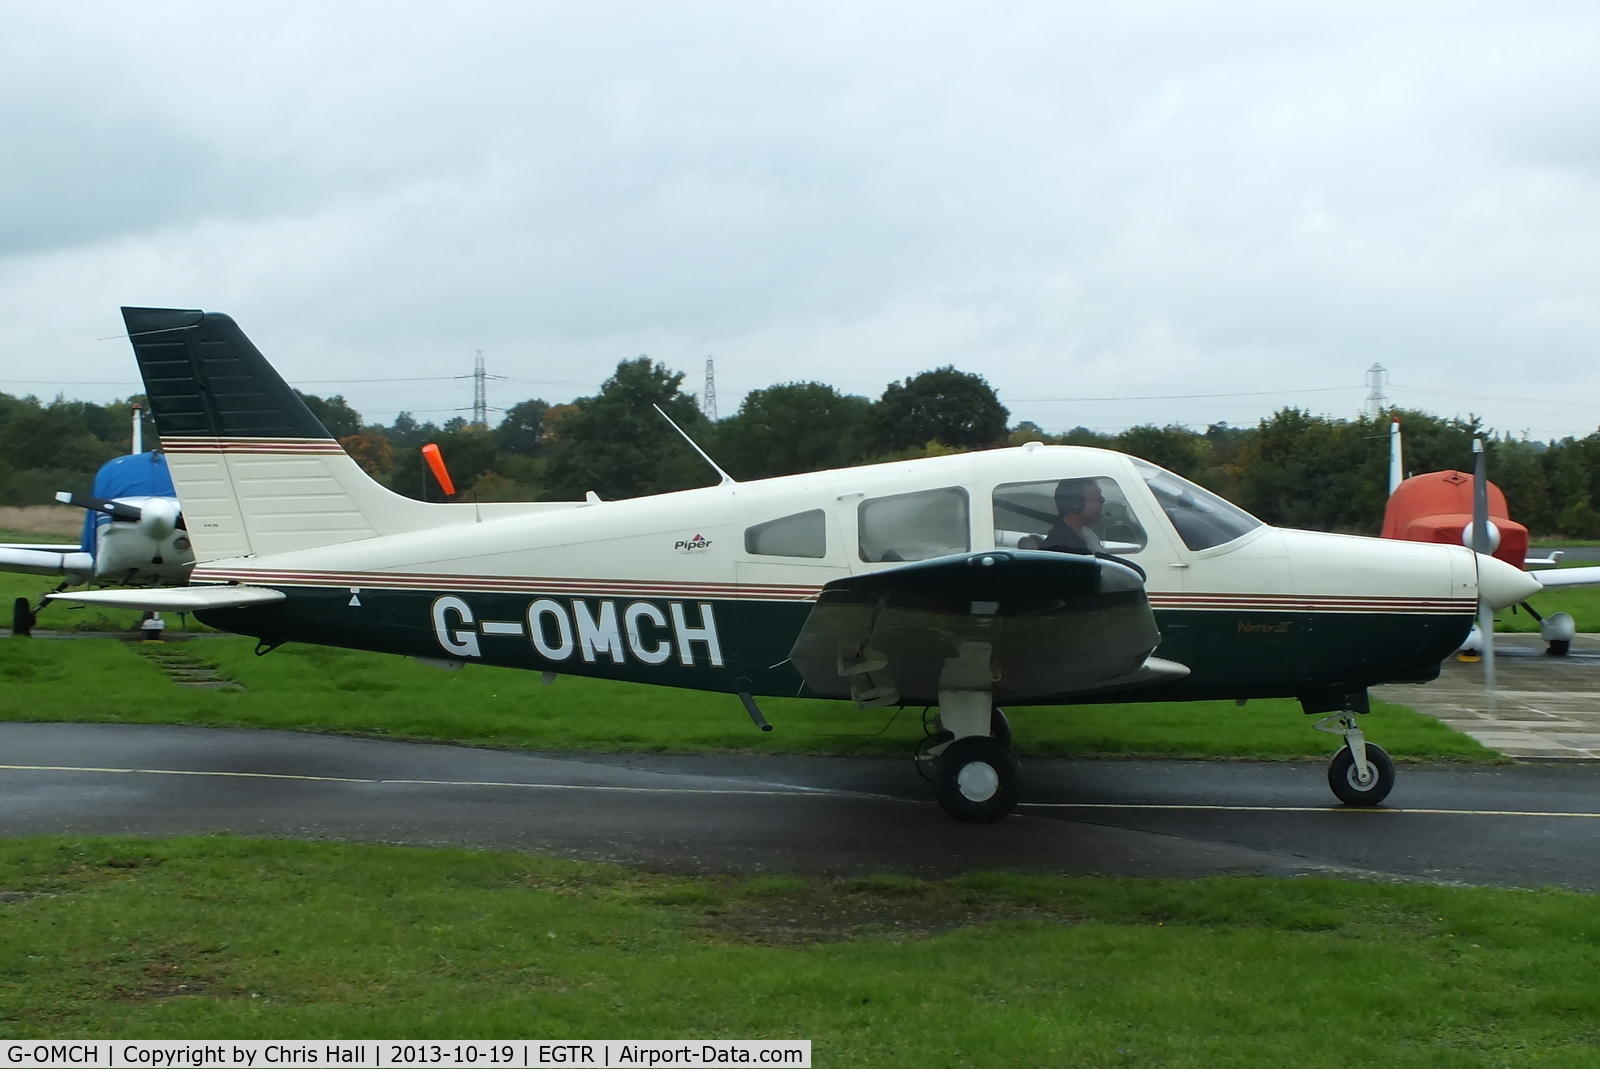 G-OMCH, 2007 Piper PA-28-161 C/N 2842291, Charley Ltd